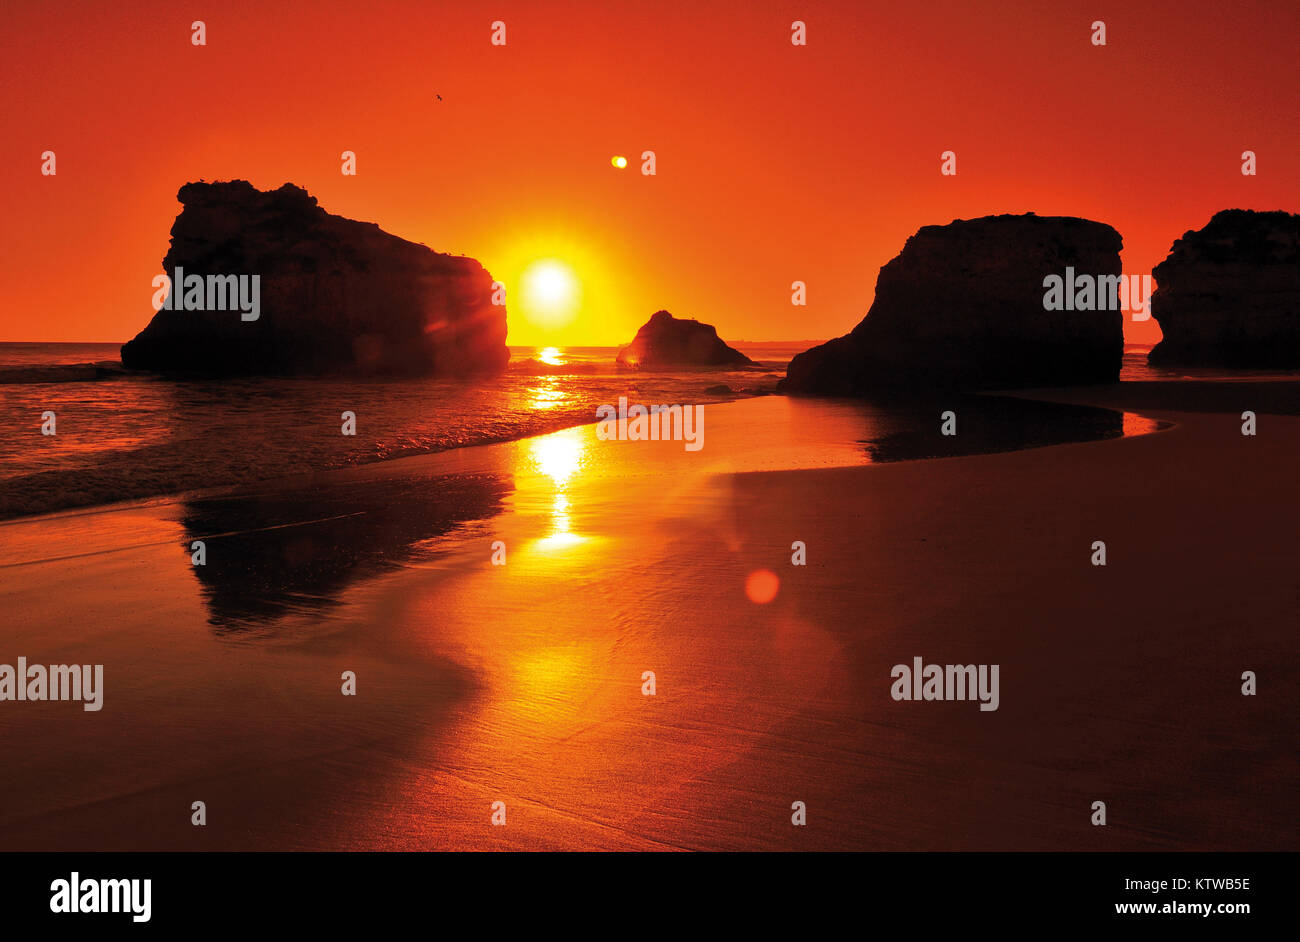 Scenic sundown at beach with orange horizon and rock silhouettes Stock Photo